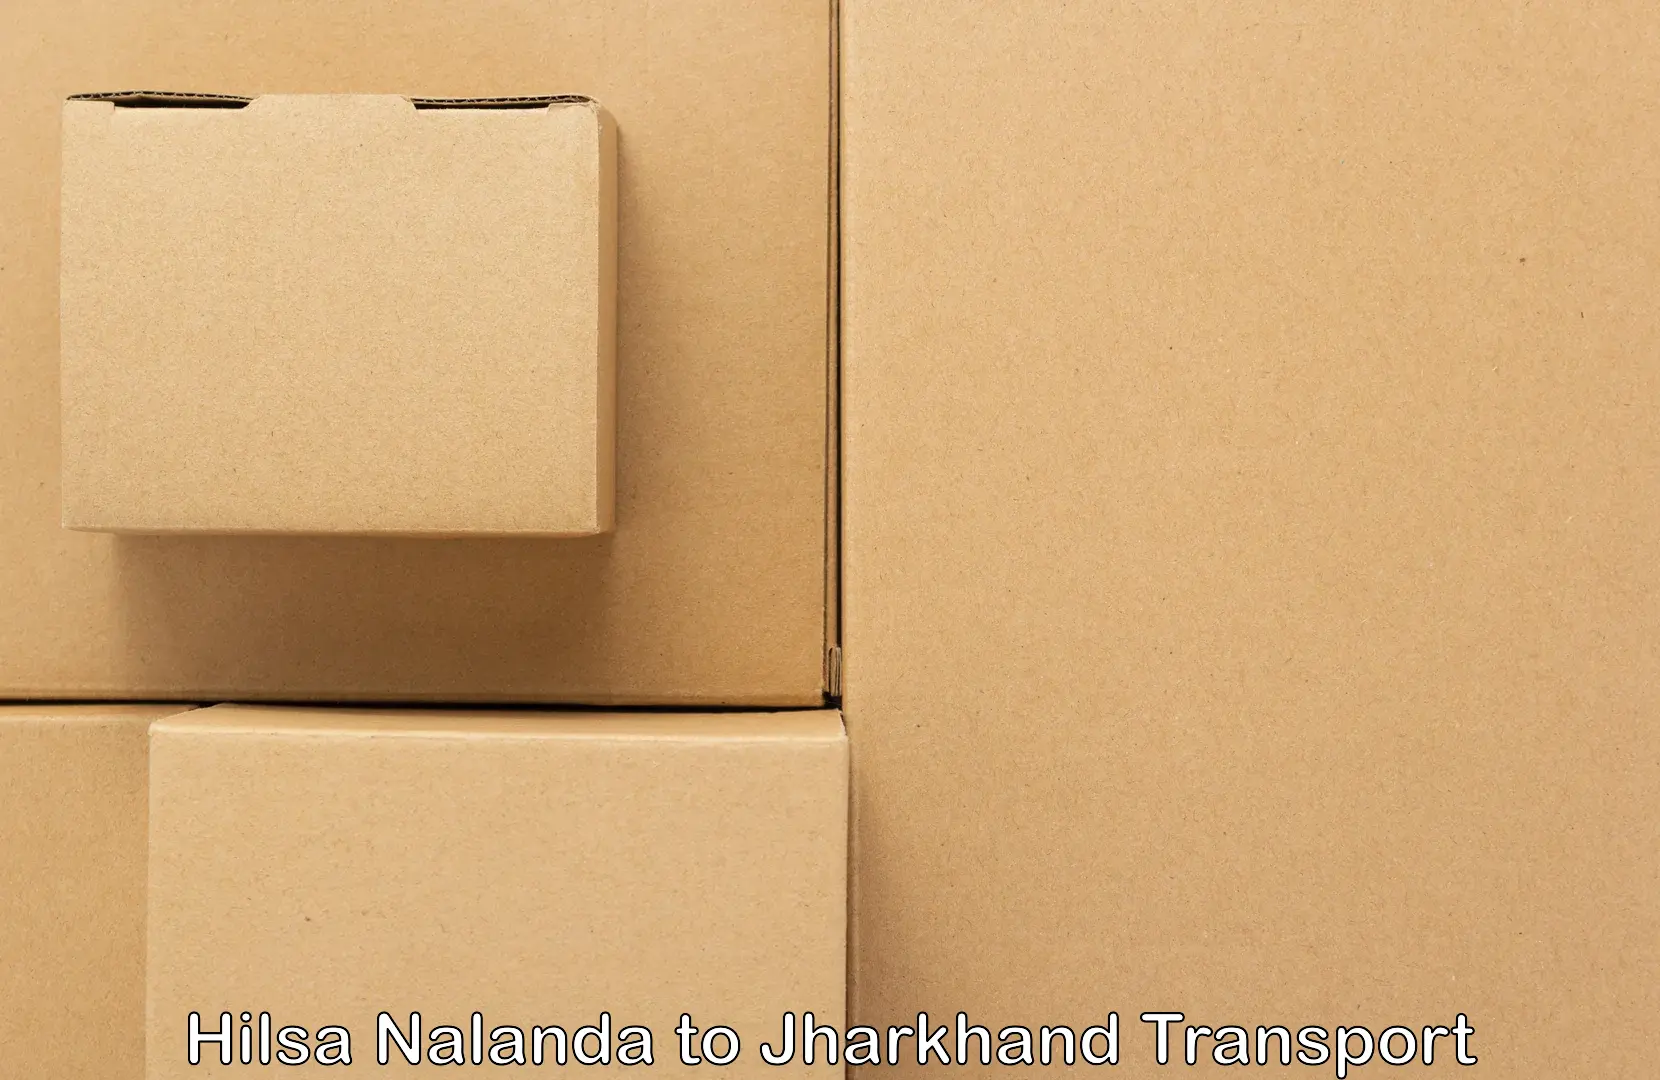 Goods delivery service Hilsa Nalanda to Peterbar